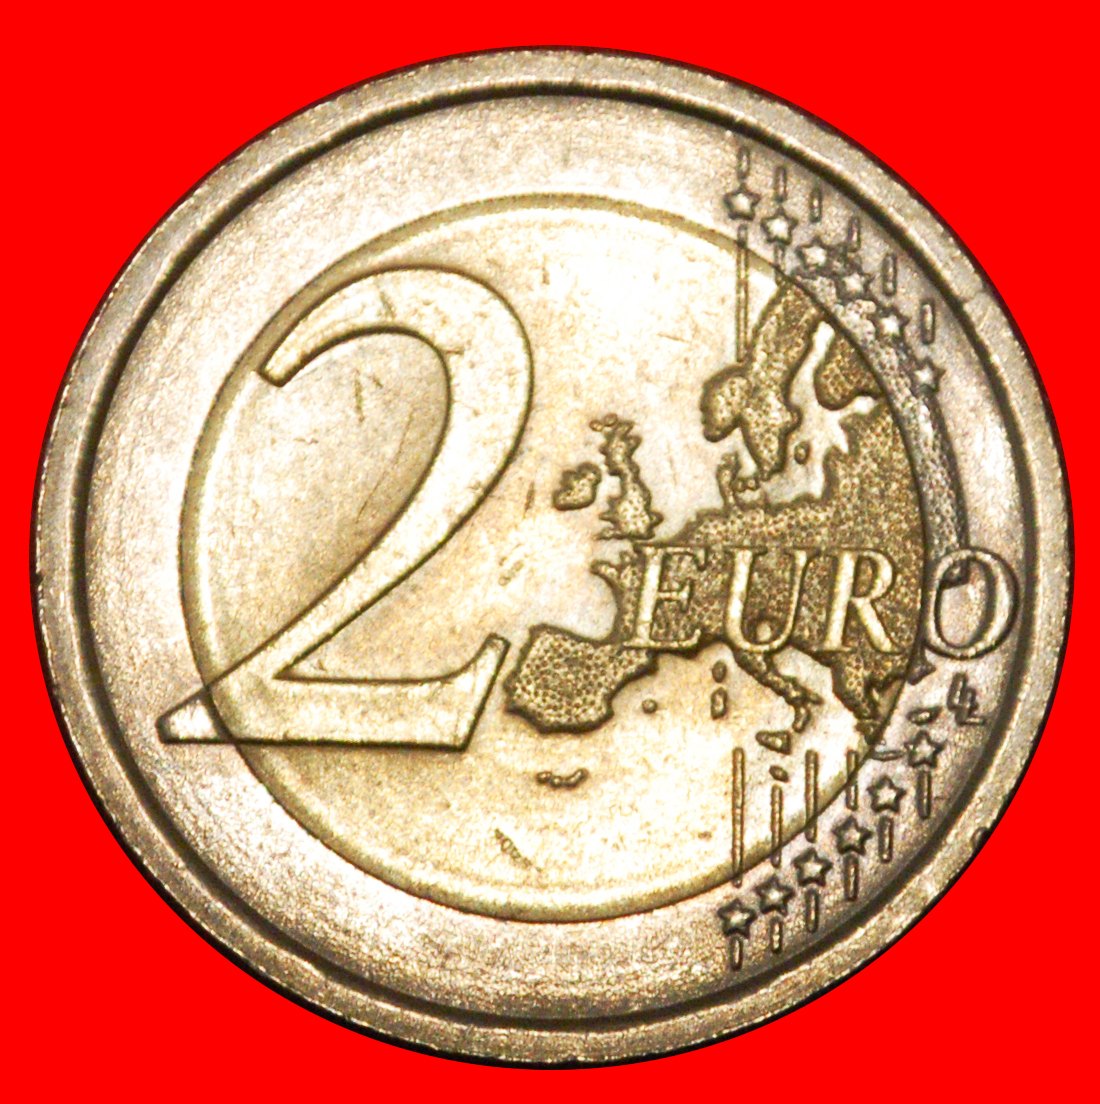  * LEONARDO DA VINCI 1452-1519 POLEN: ITALIEN ★ 2 EURO 2019R! uSTG STEMPELGLANZ!★OHNE VORBEHALT!   